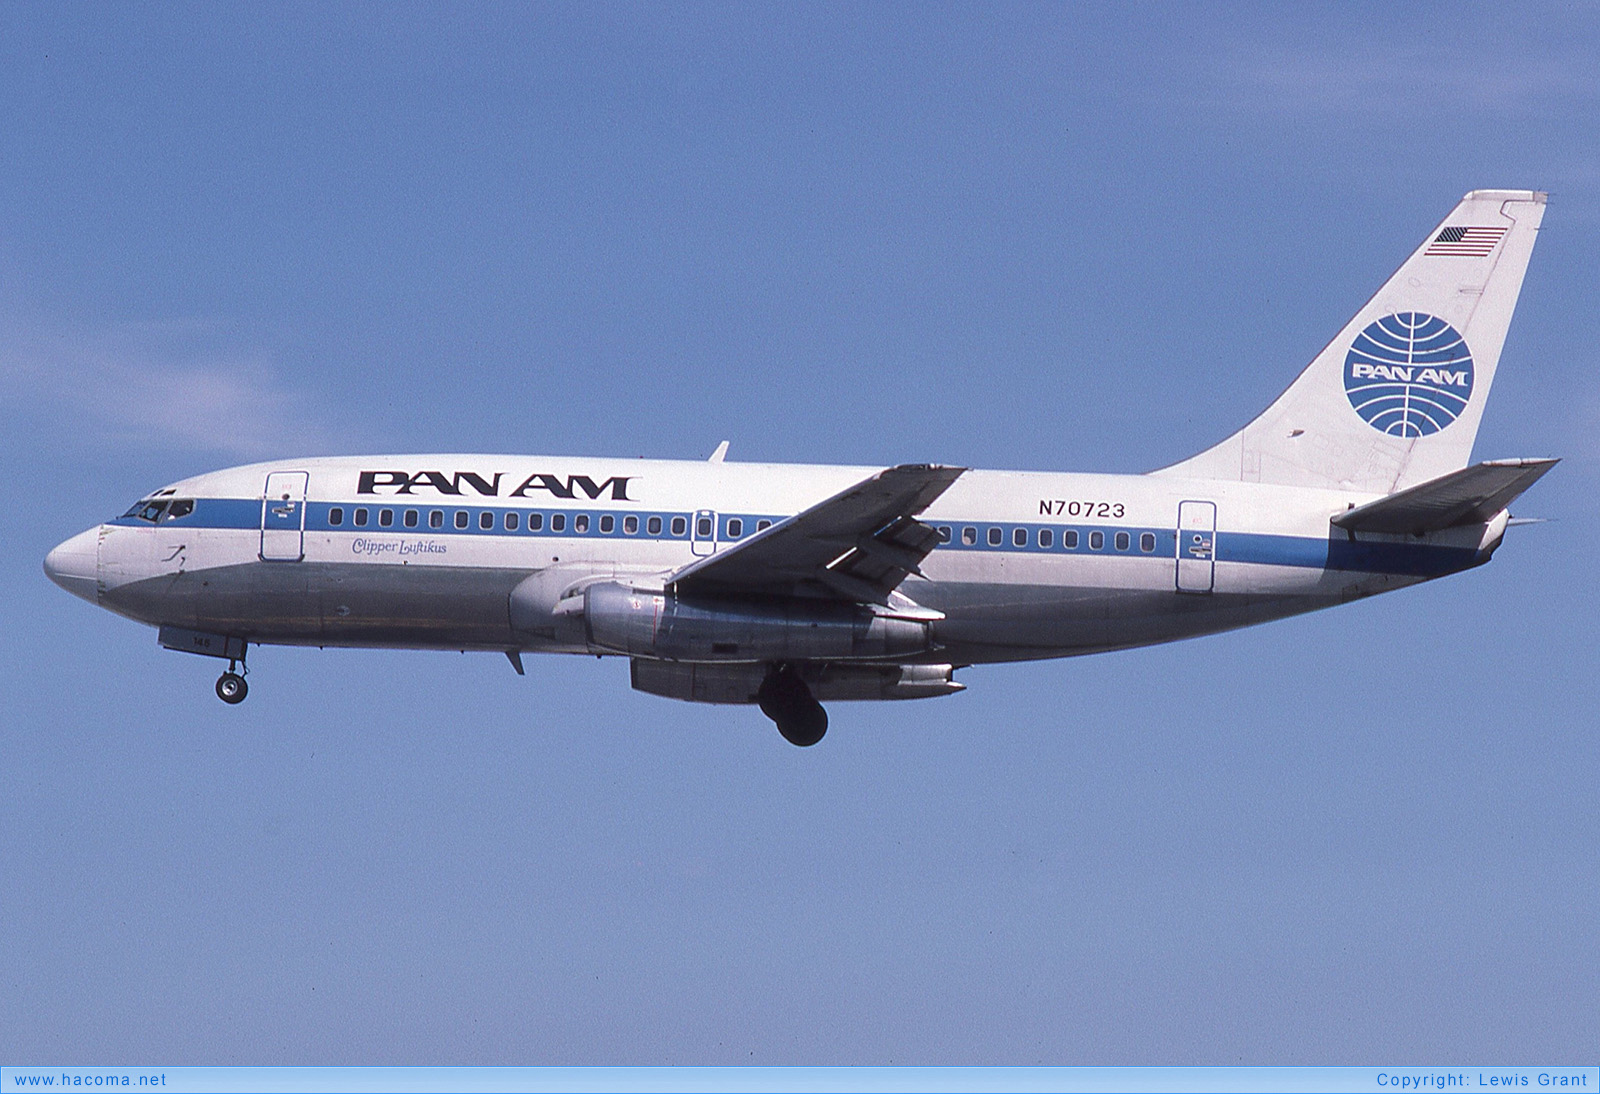 Photo of N70723 - Pan Am Clipper Luftikus / Dawn - Miami International Airport - Nov 21, 1987